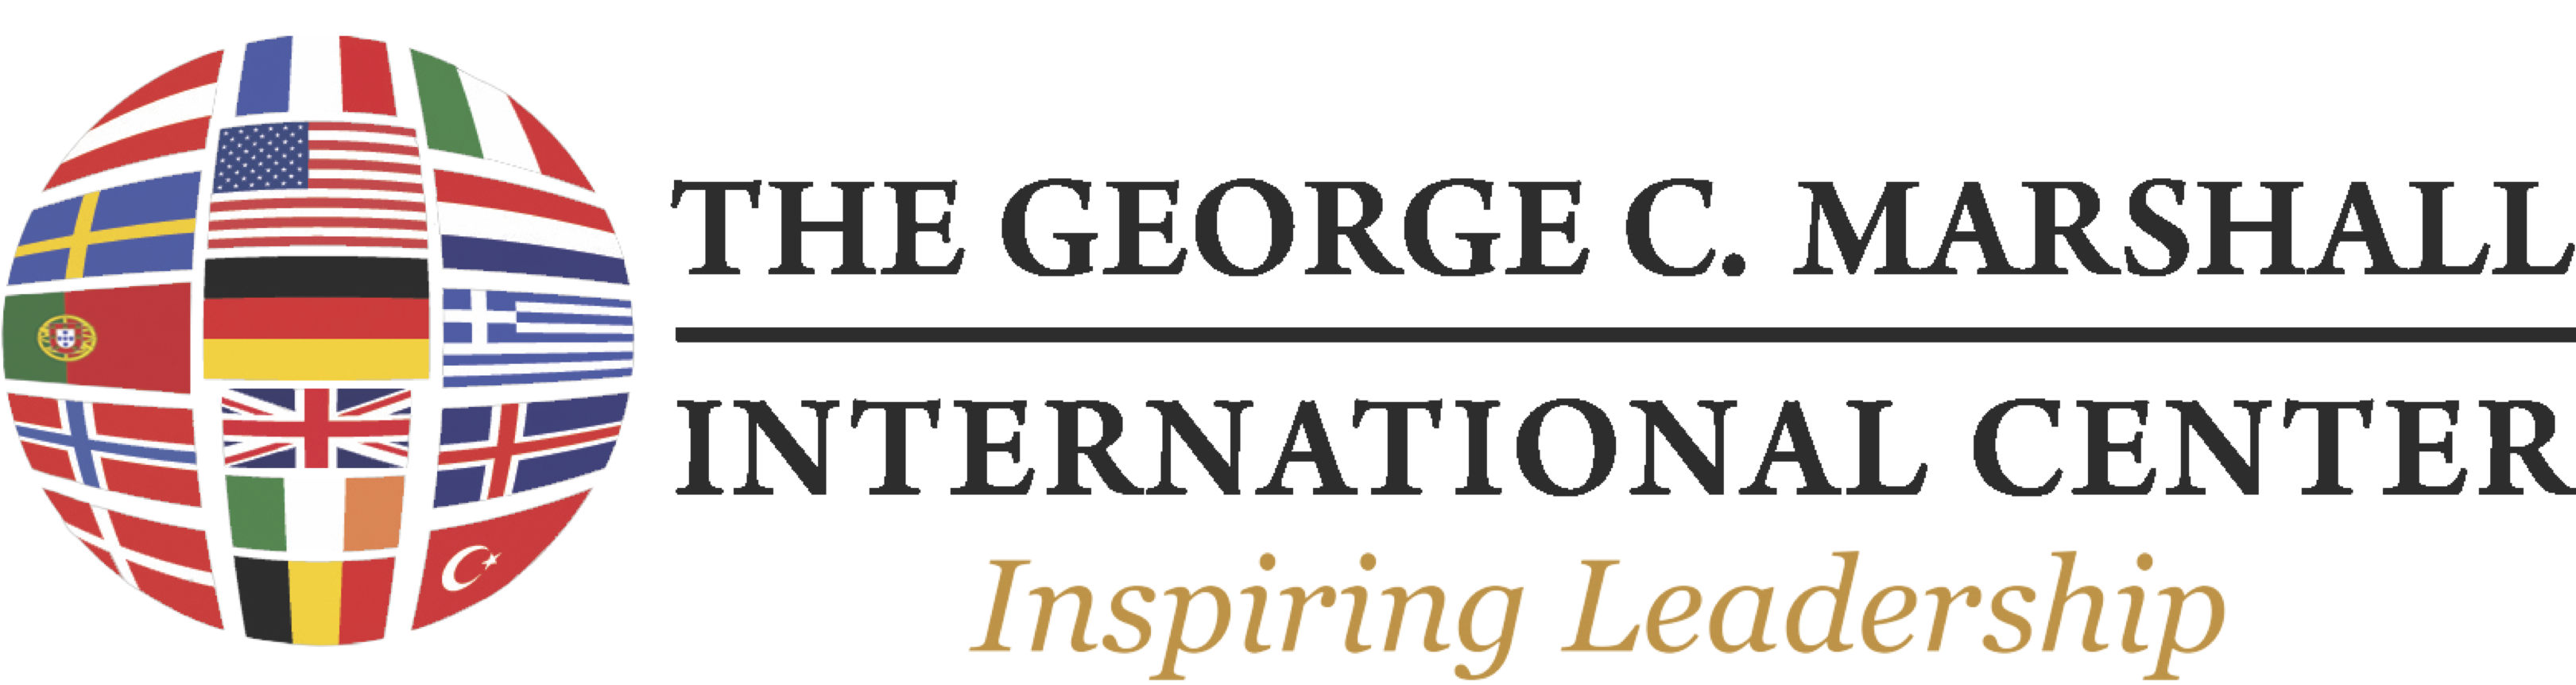 George C Marshall International Center Inc logo